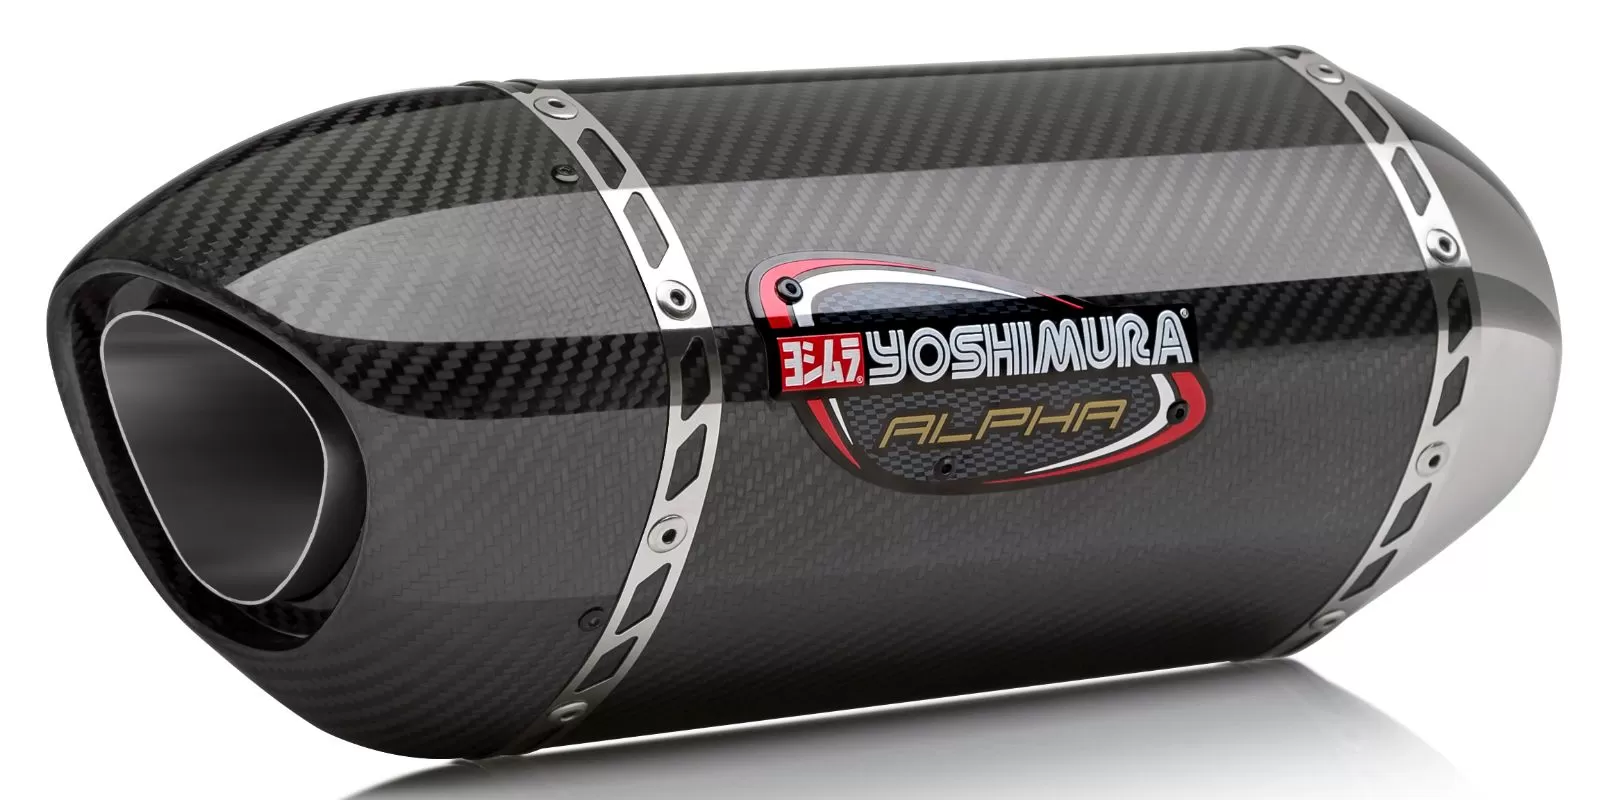 Yoshimura Alpha Stainless Slip-On Exhaust with Carbon Fiber Muffler Suzuki GSX-S1000/F/FZ/Z 2016-2020 - 11100EM220